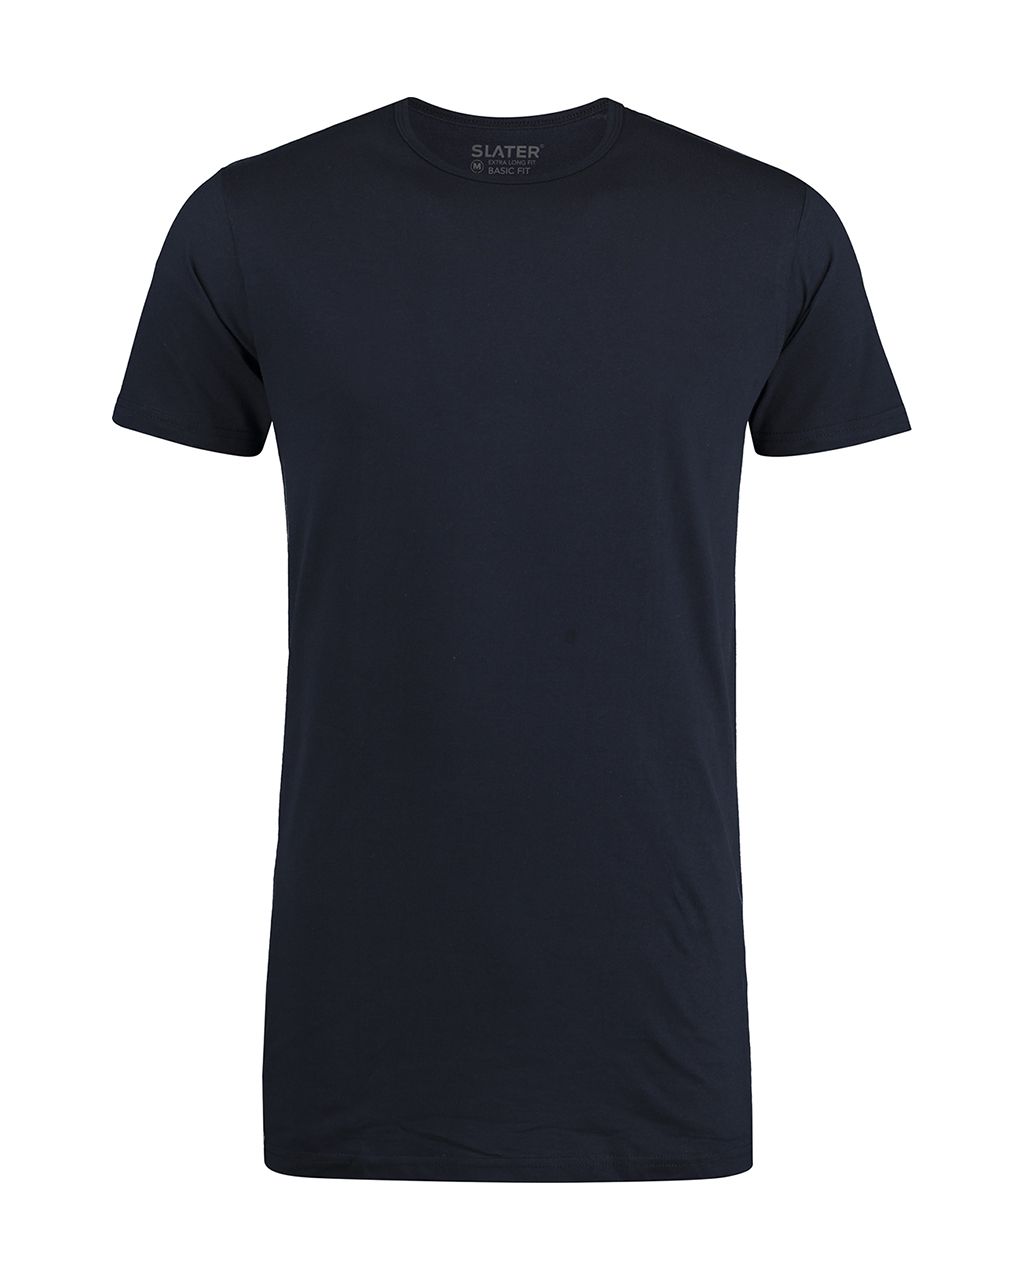 Slater T-shirt KM Donker blauw 063882-001-3XL